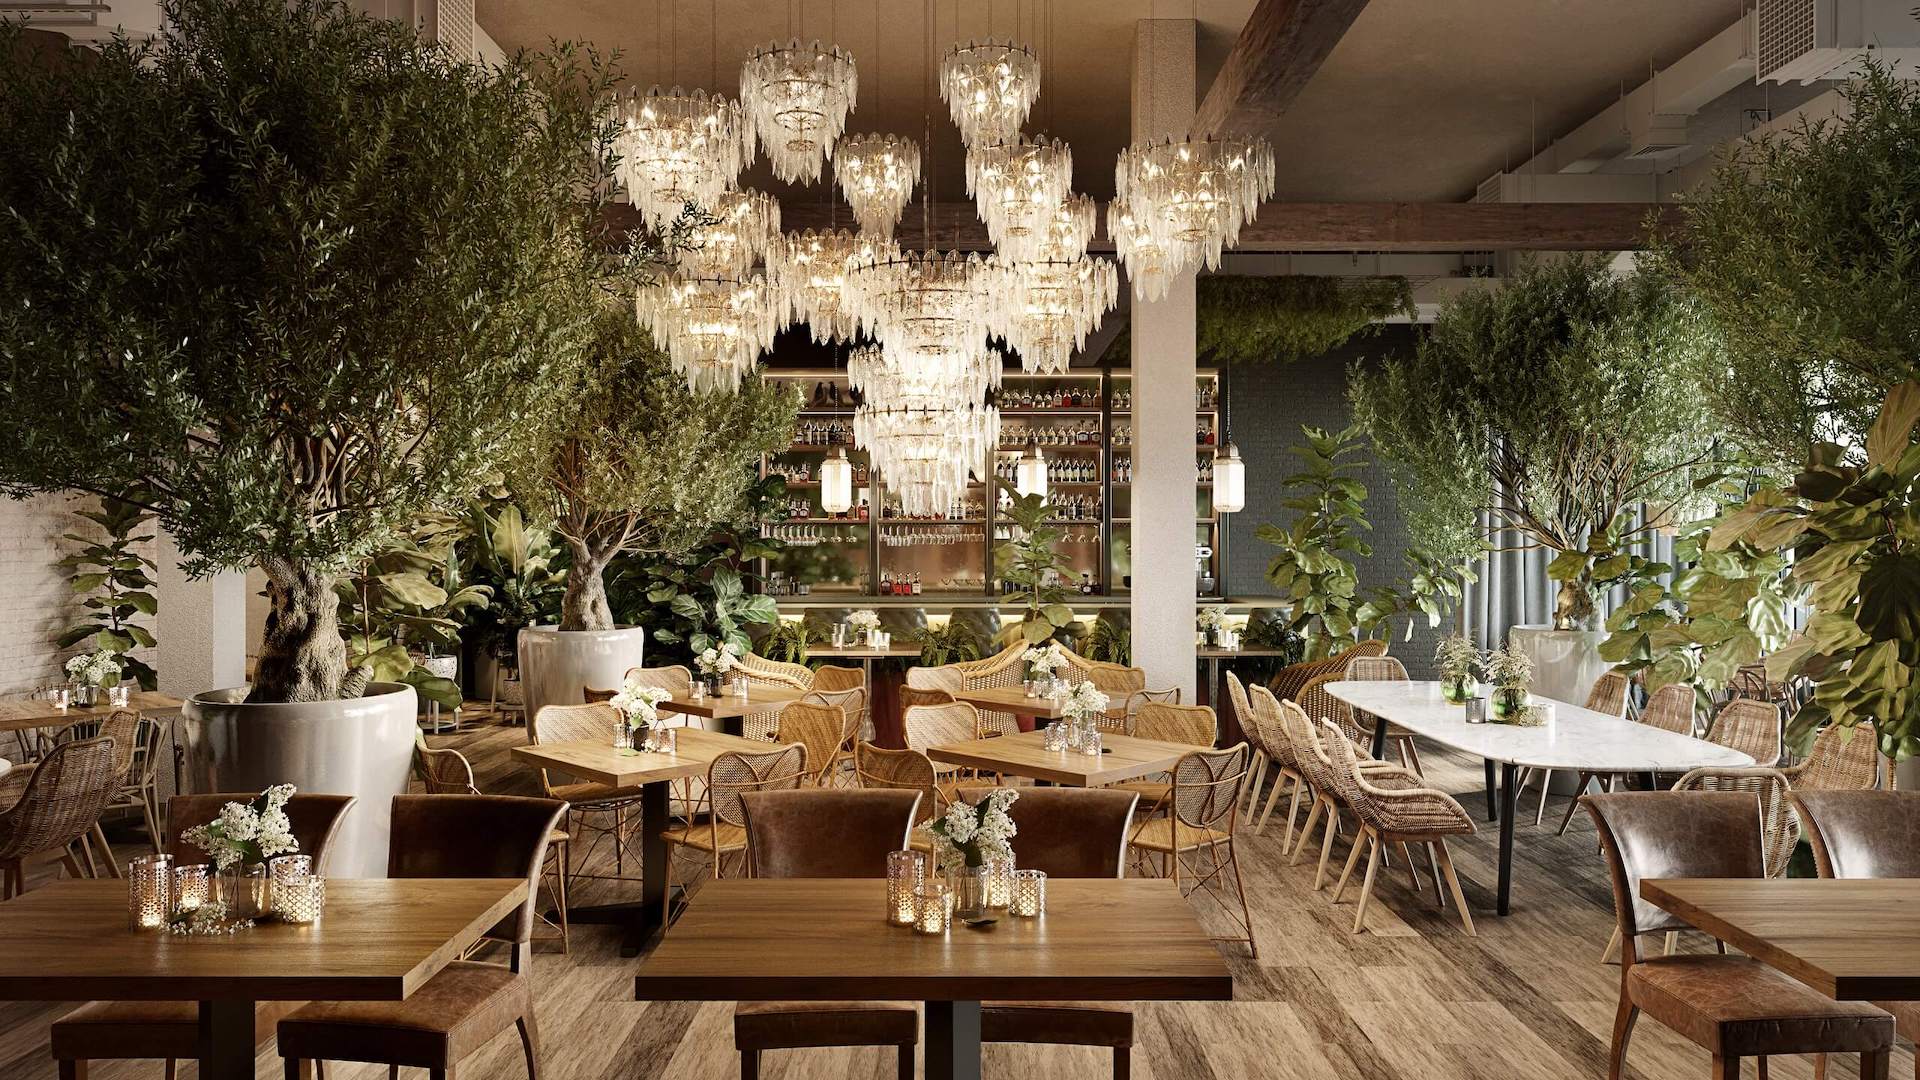 Photorealistic Architectural CGI of a Florida Restaurant Interior